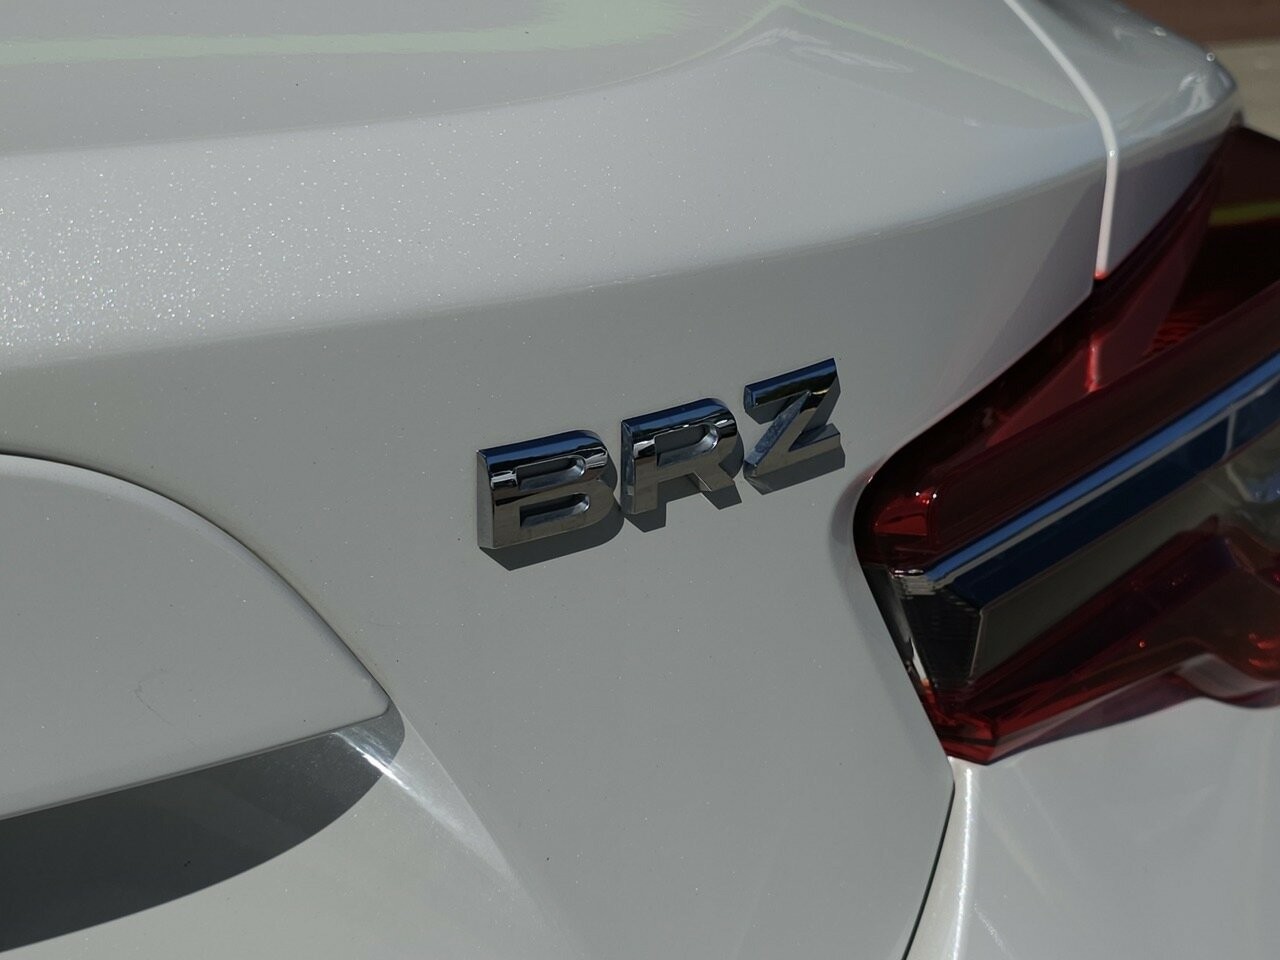 Subaru Brz image 3